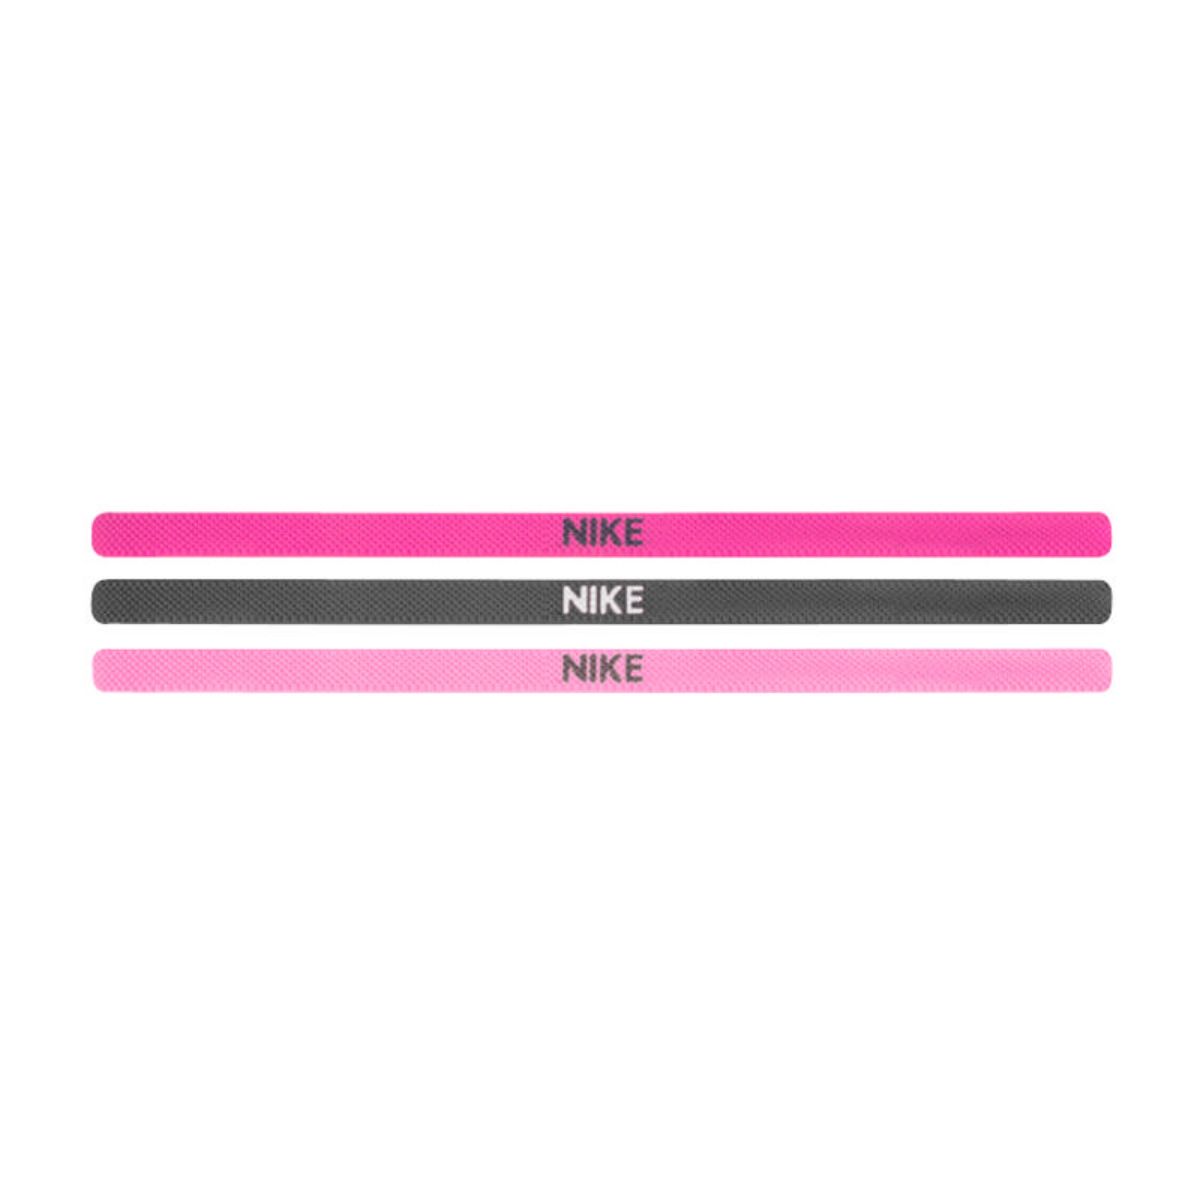 nike-elastic-hairbands-3pk-944spark-pinkgridironprism